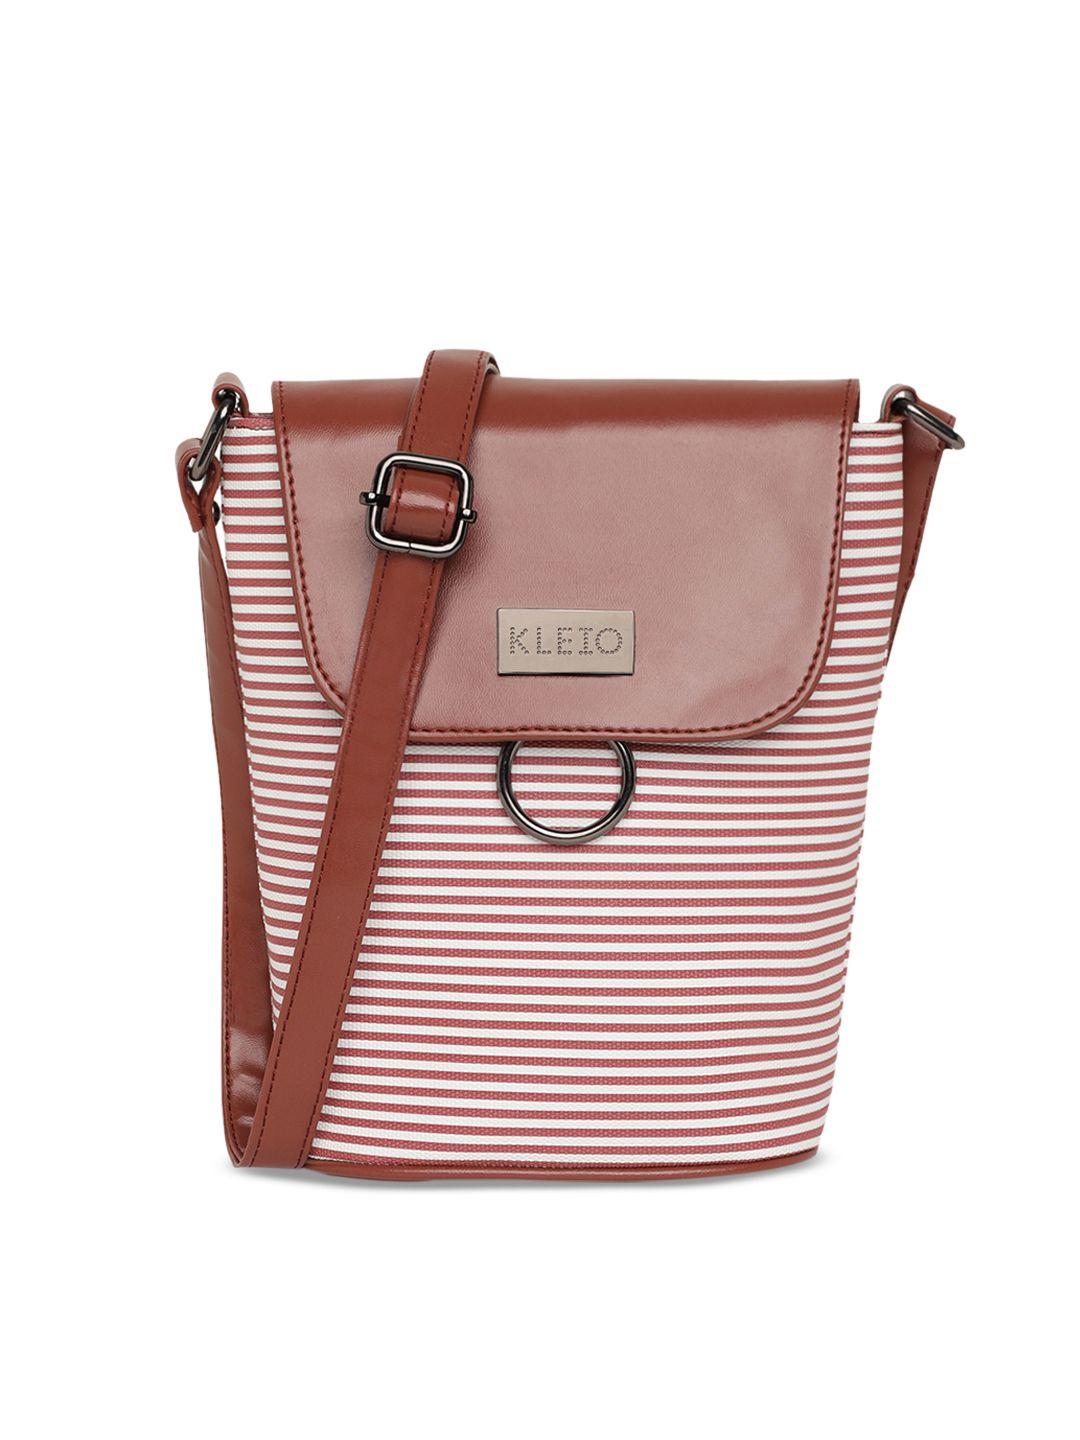 KLEIO Brown & White Striped Sling Bag